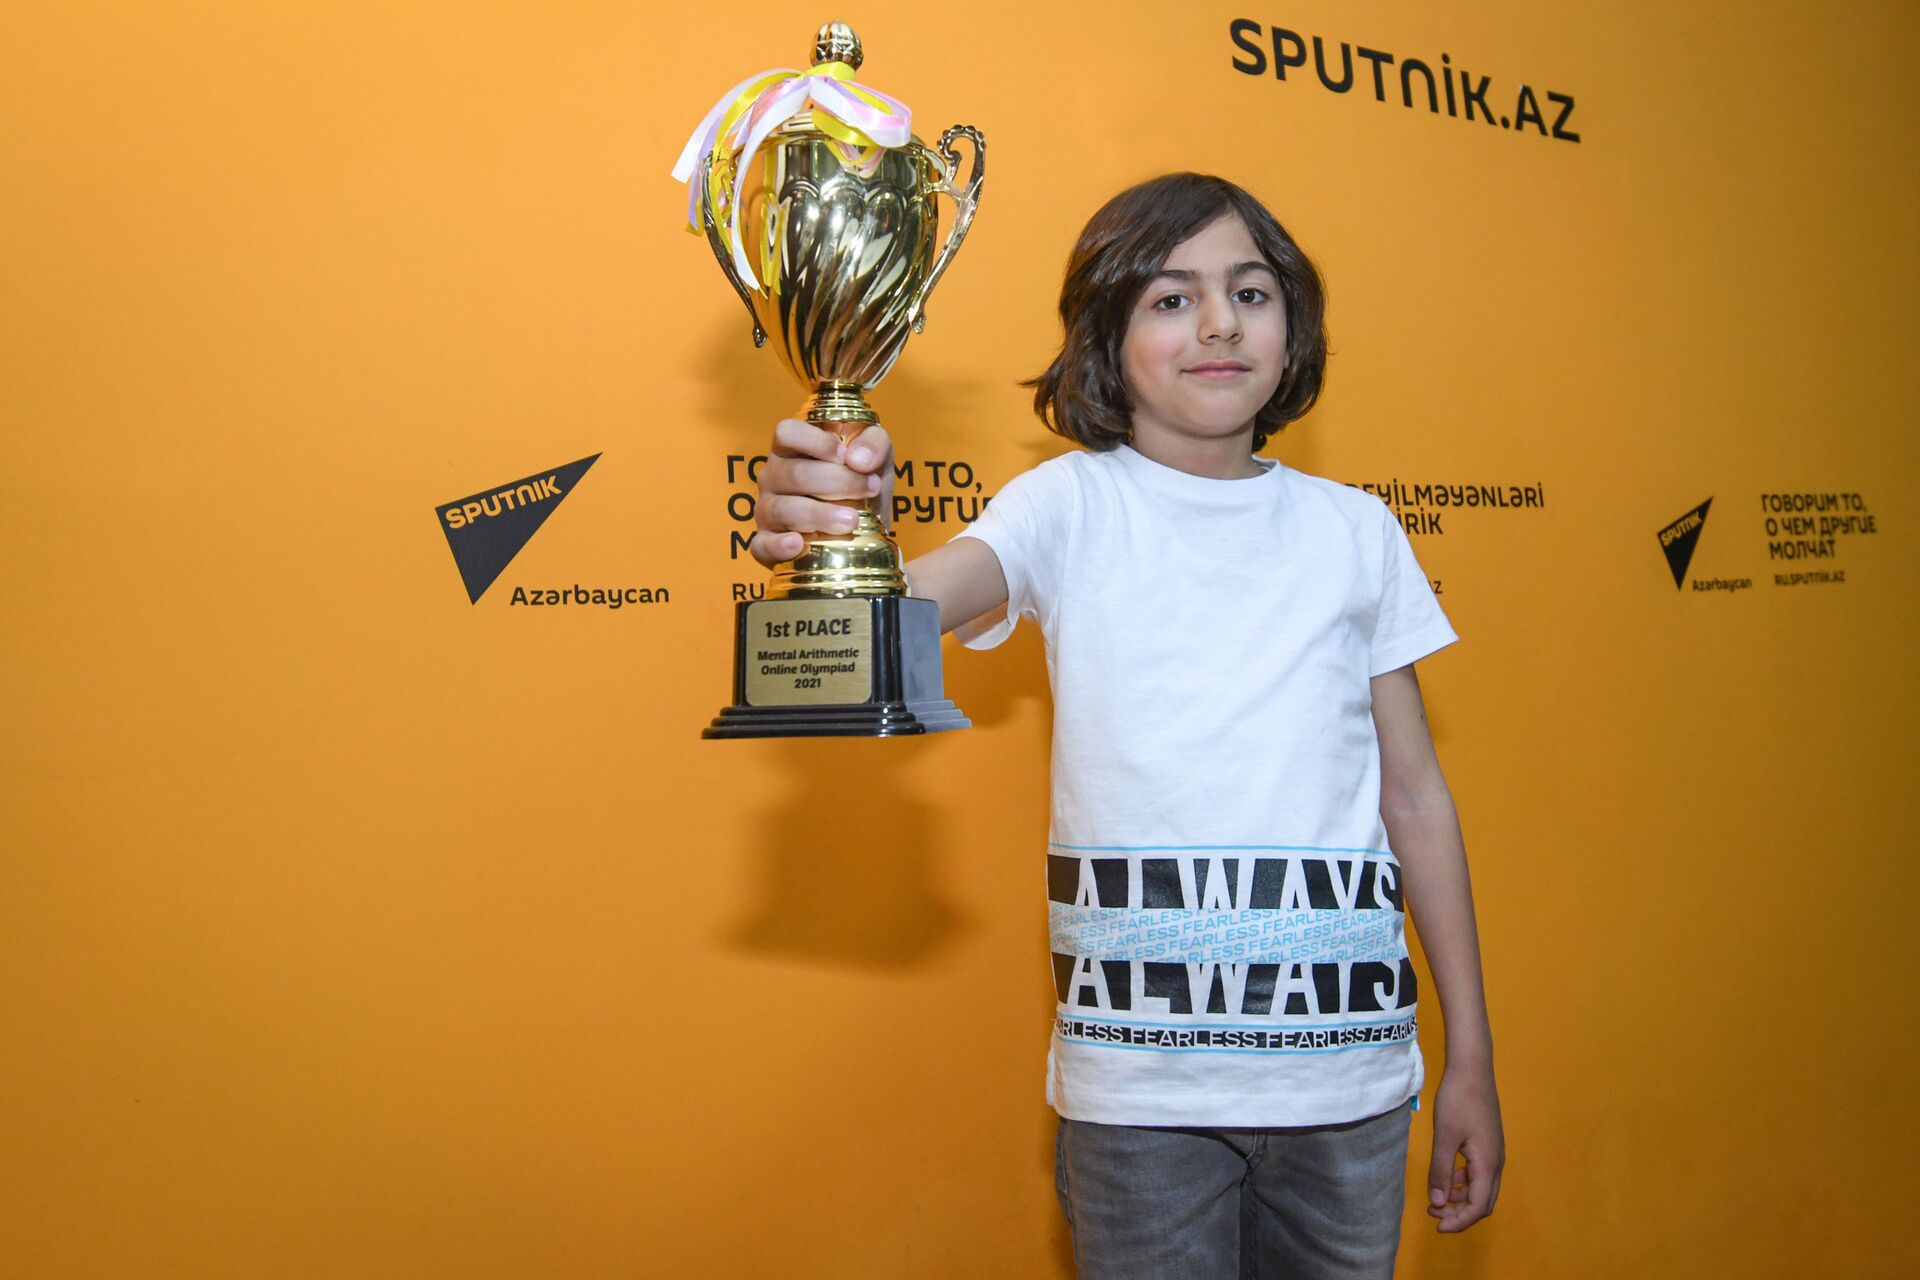 Шестилетний гений из Азербайджана занял первое место на международной олимпиаде - Sputnik Азербайджан, 1920, 21.05.2021